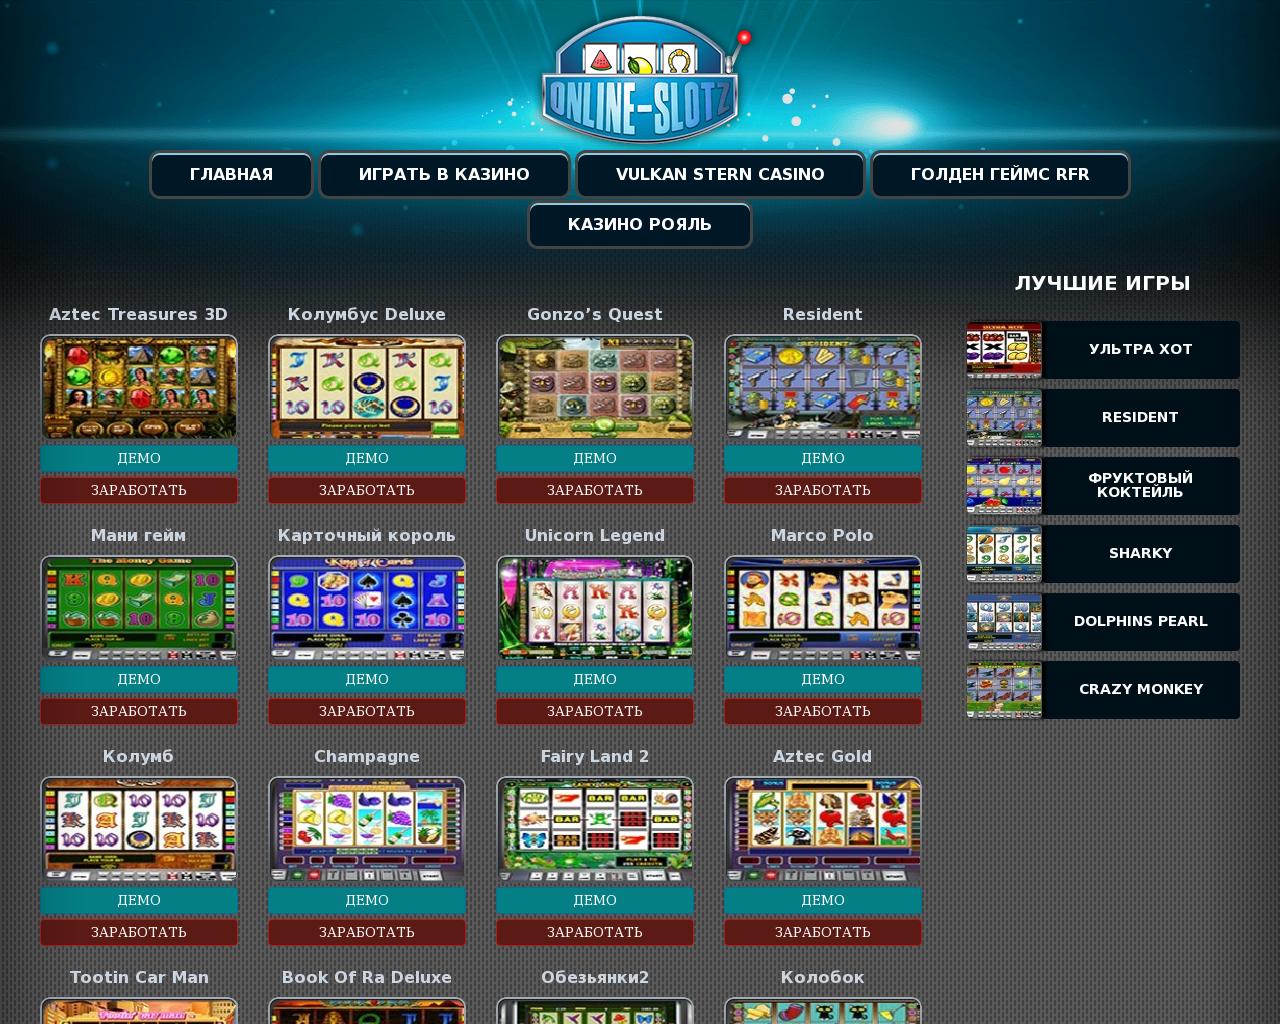 Вулкан клуб казино онлайн отзывы казино адмирал х официальный сайт бонус